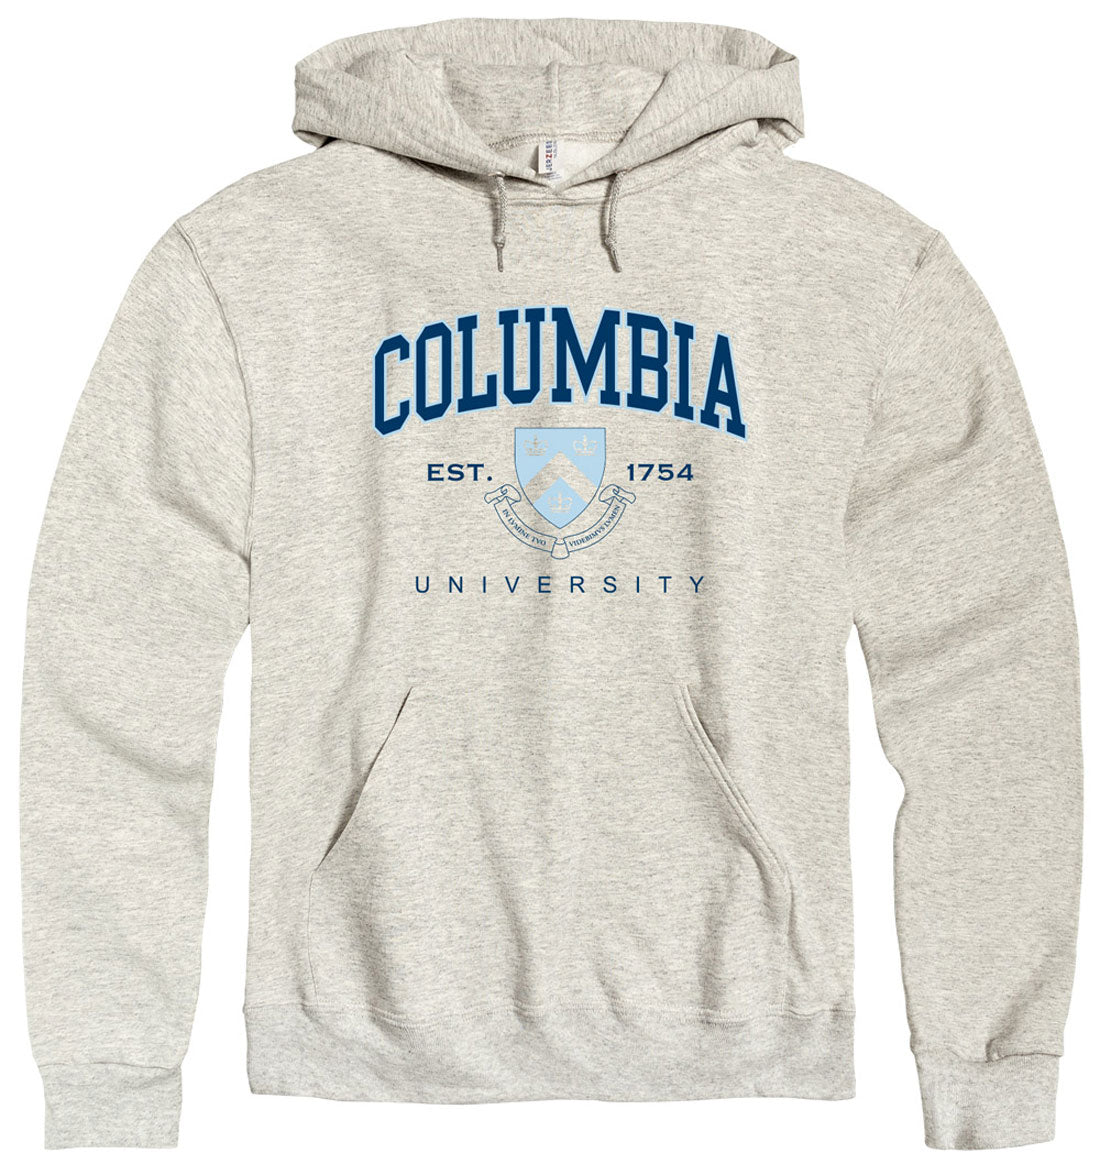 Columbia University arch and seal hoodie sweatshirt-Oatmeal